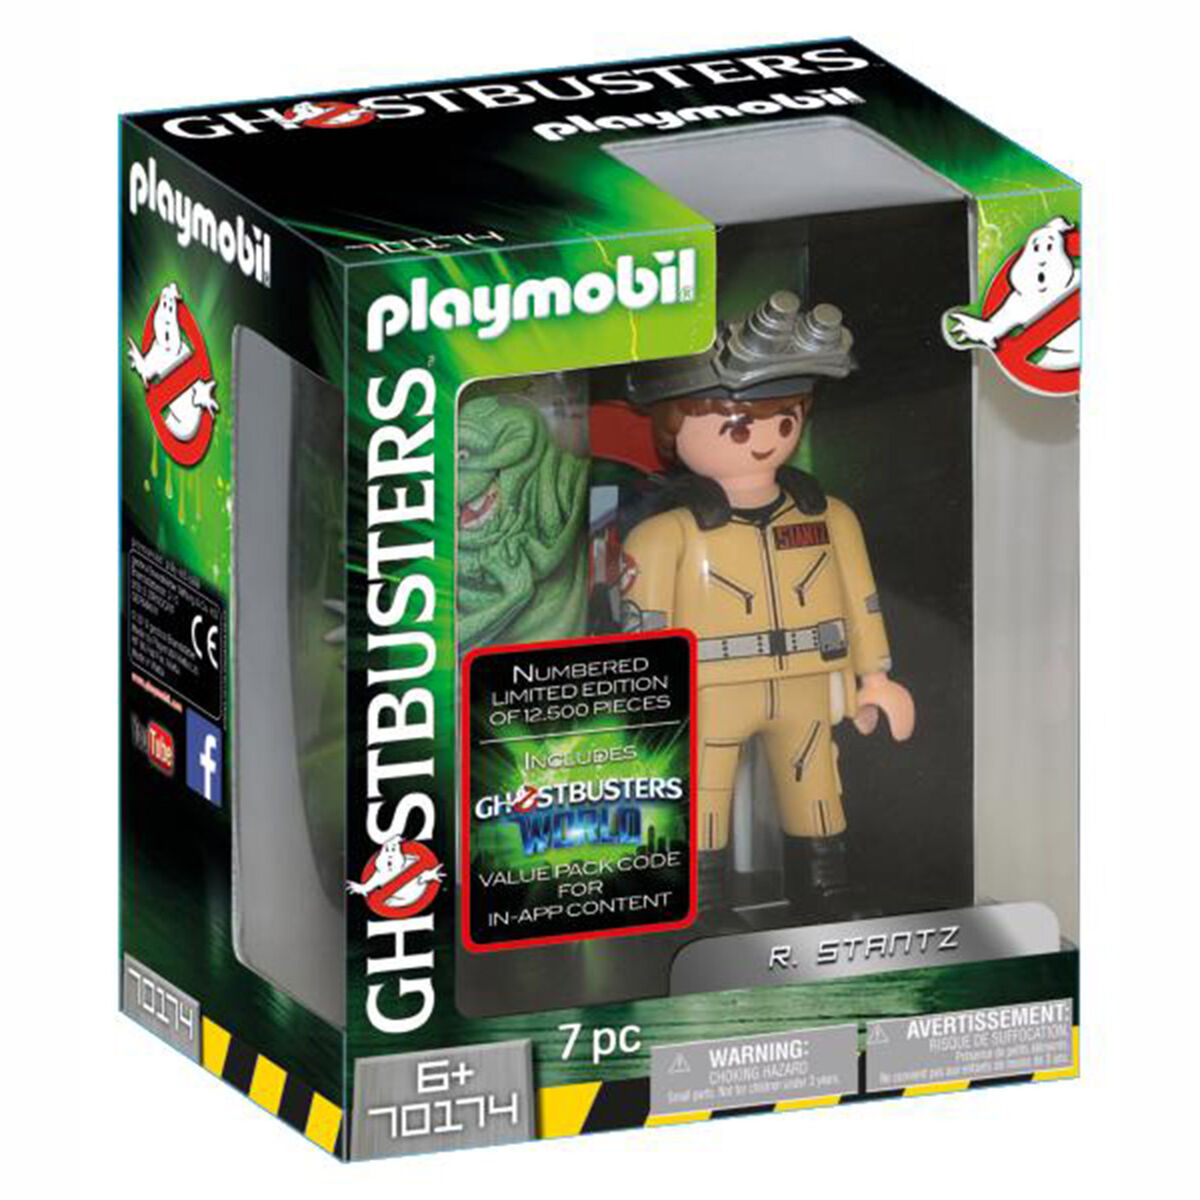 Figura Ghostbusters R. Stantz de Playmobil